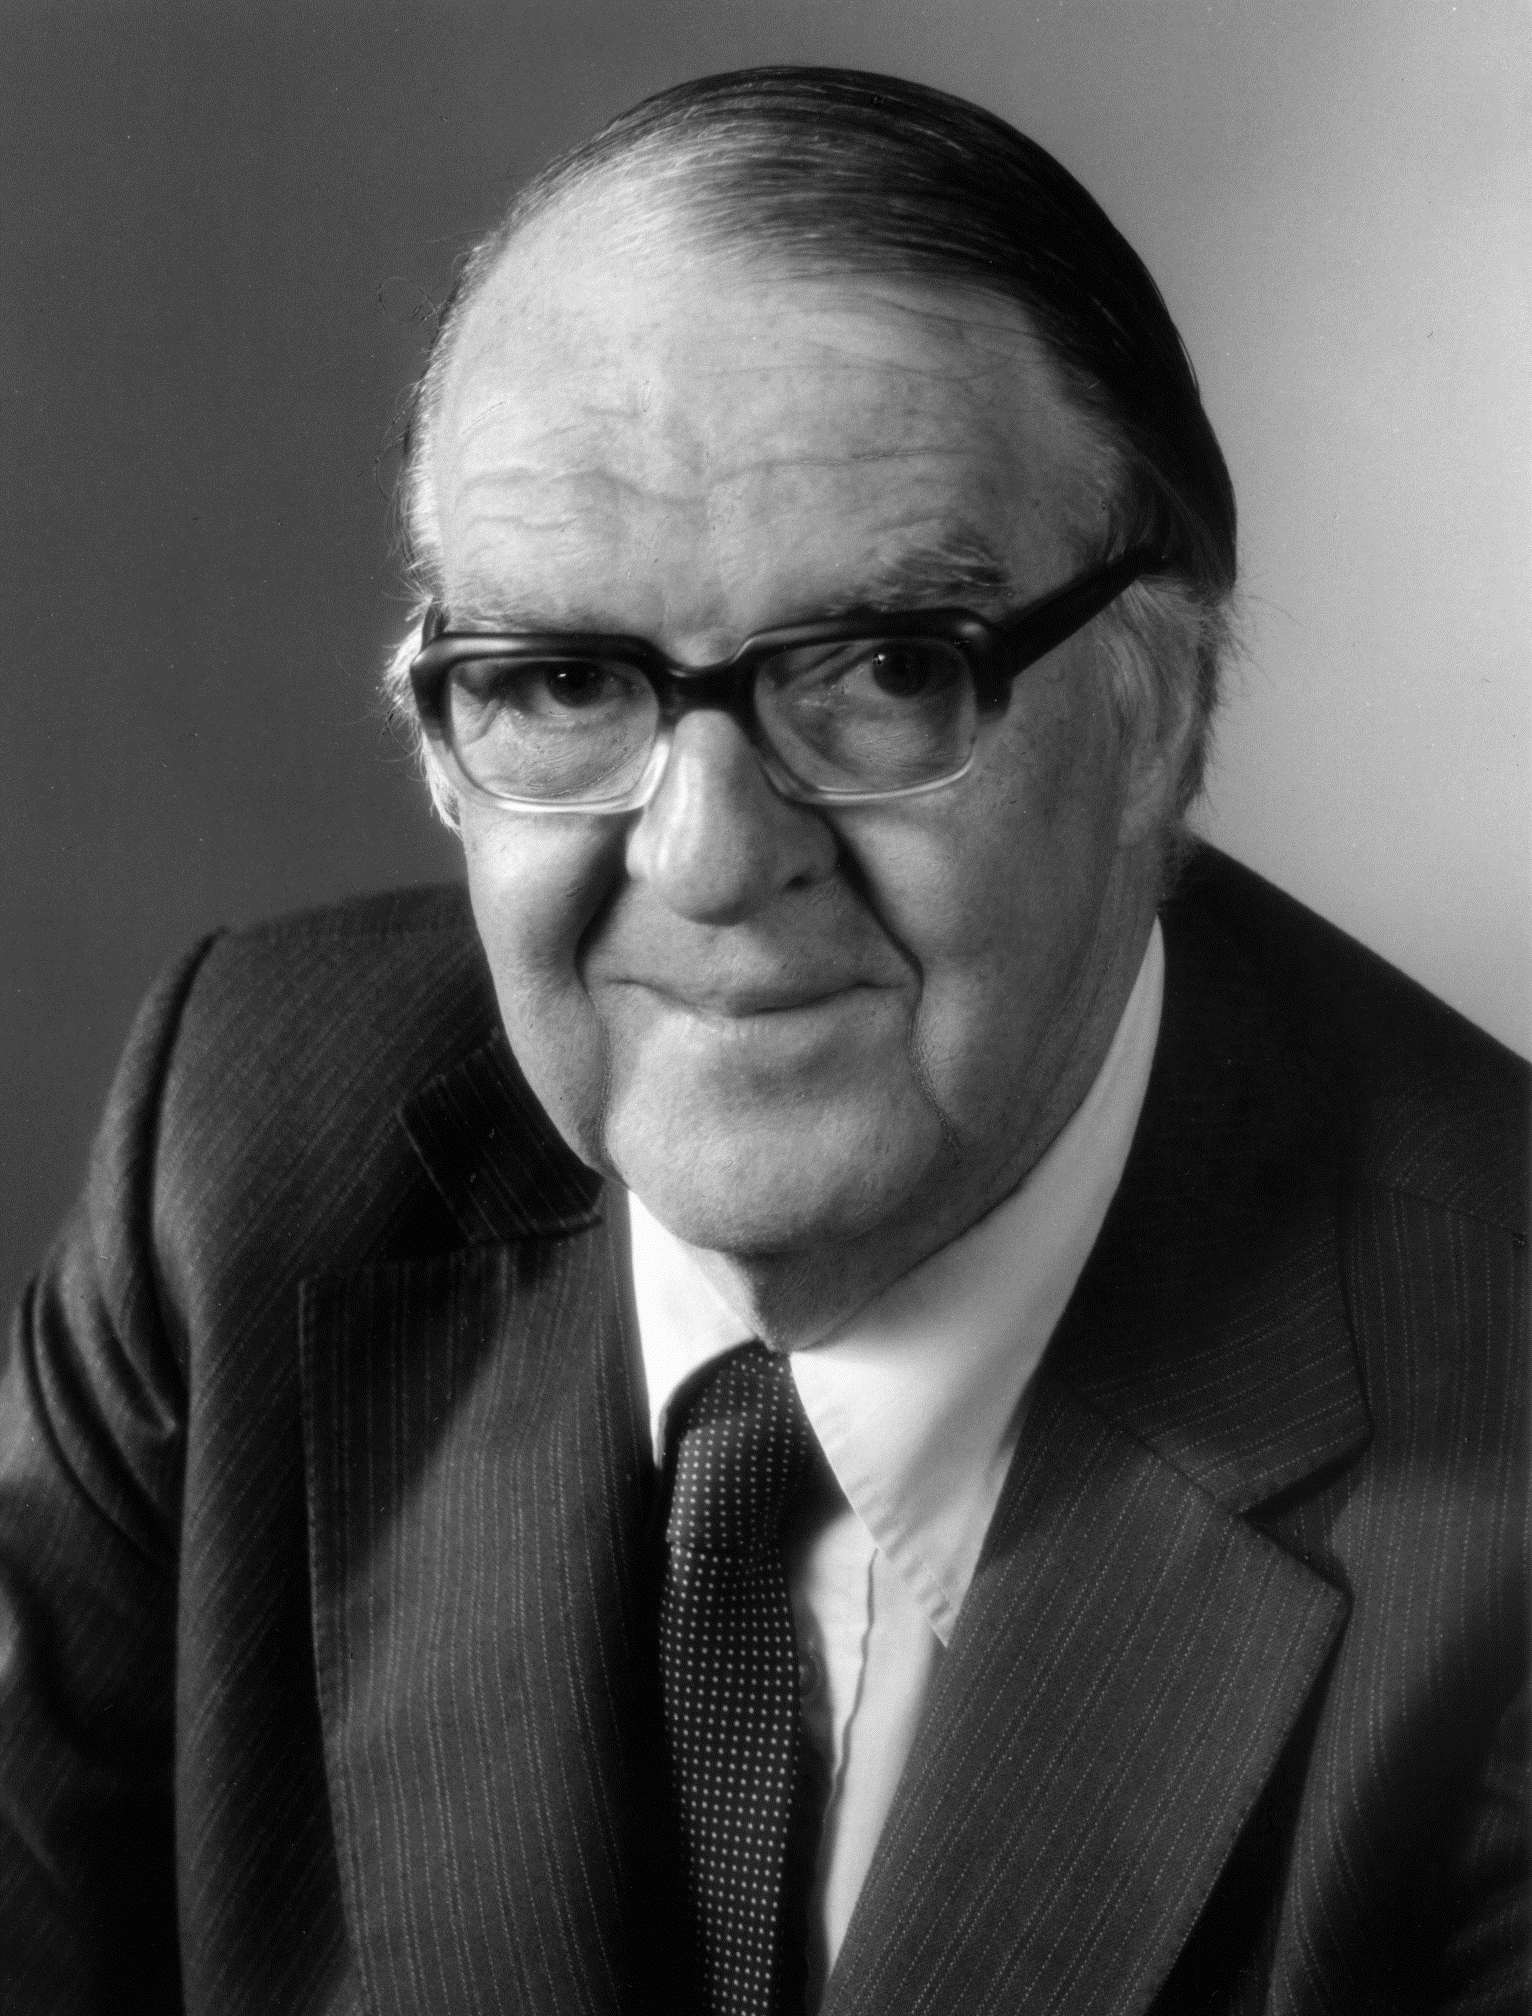 Professor Sir Philip Randle, 1926-2006